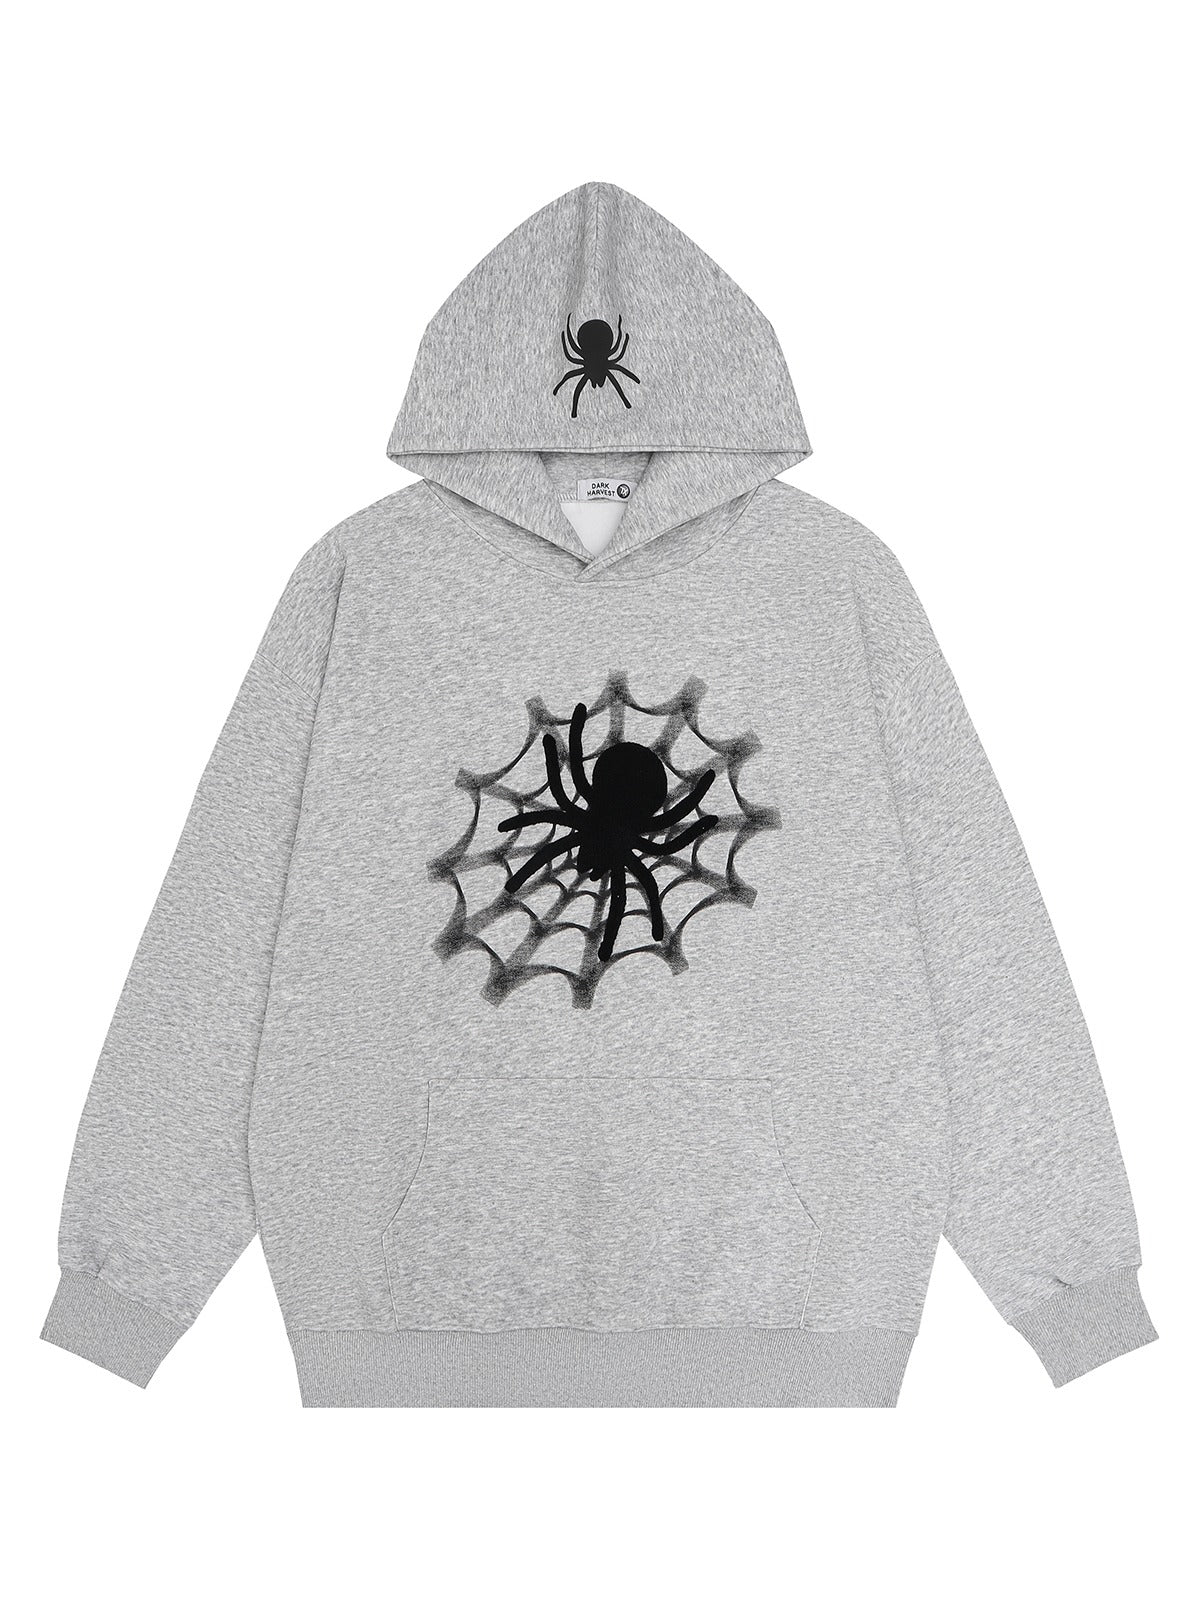 American Spider Print Hooded Sweatshirt Coat